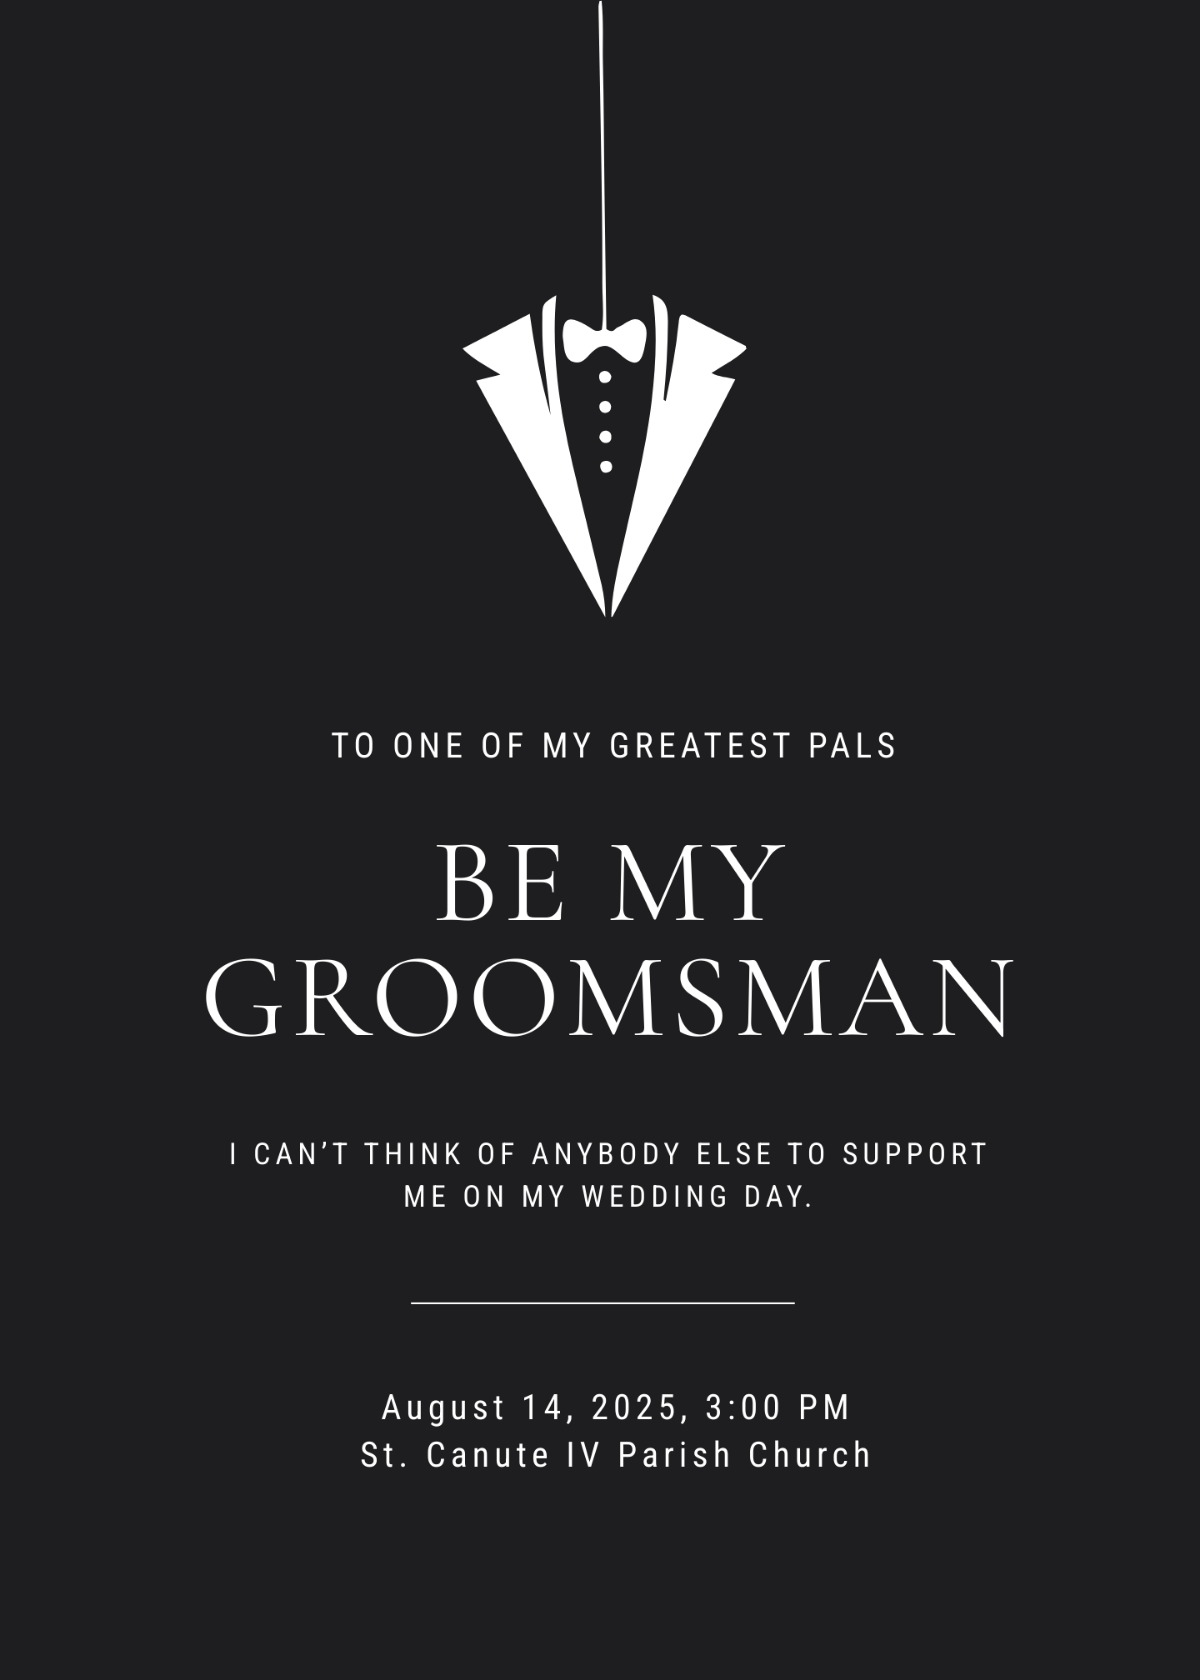 Groomsmen Invitation Card Template